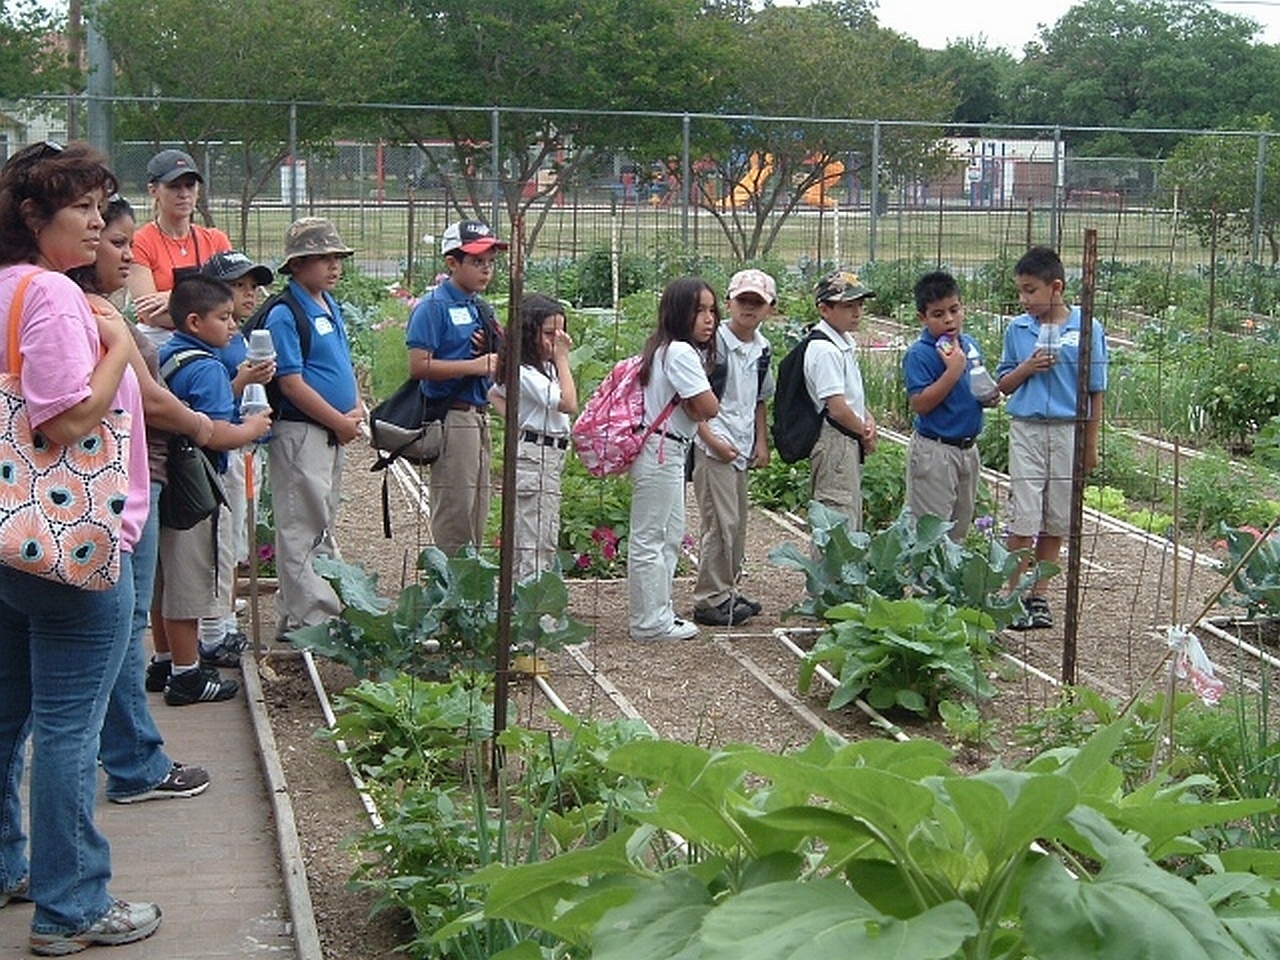 Fall Children S Vegetable Garden Program In San Antonio Accepting